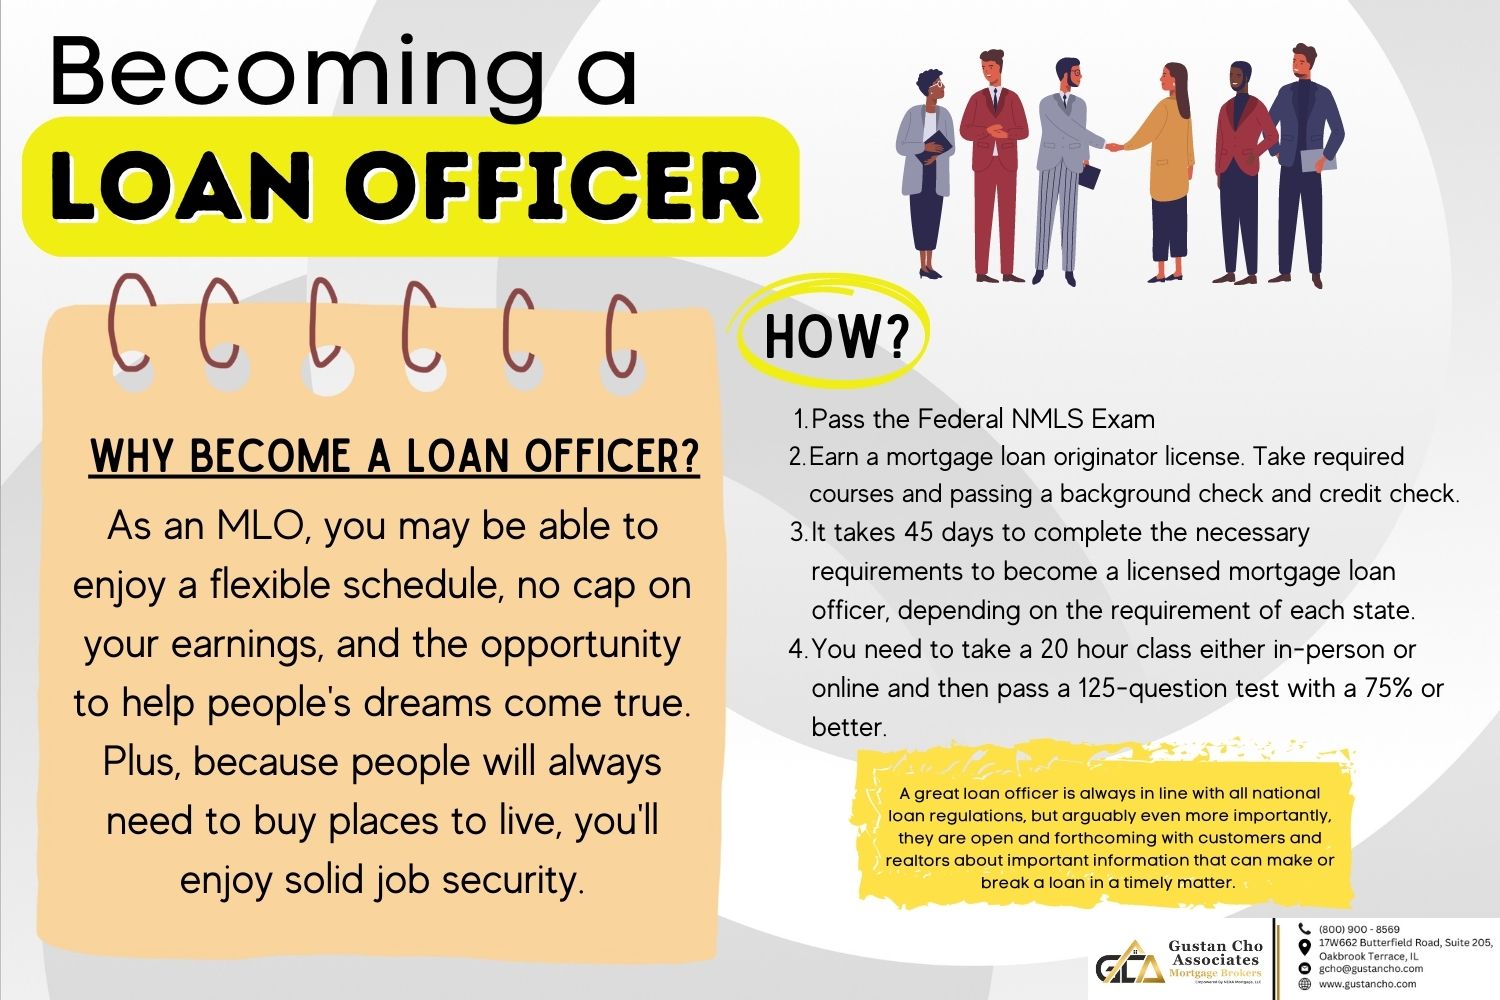 Becoming a Loan Officer at Gustan Cho Associates